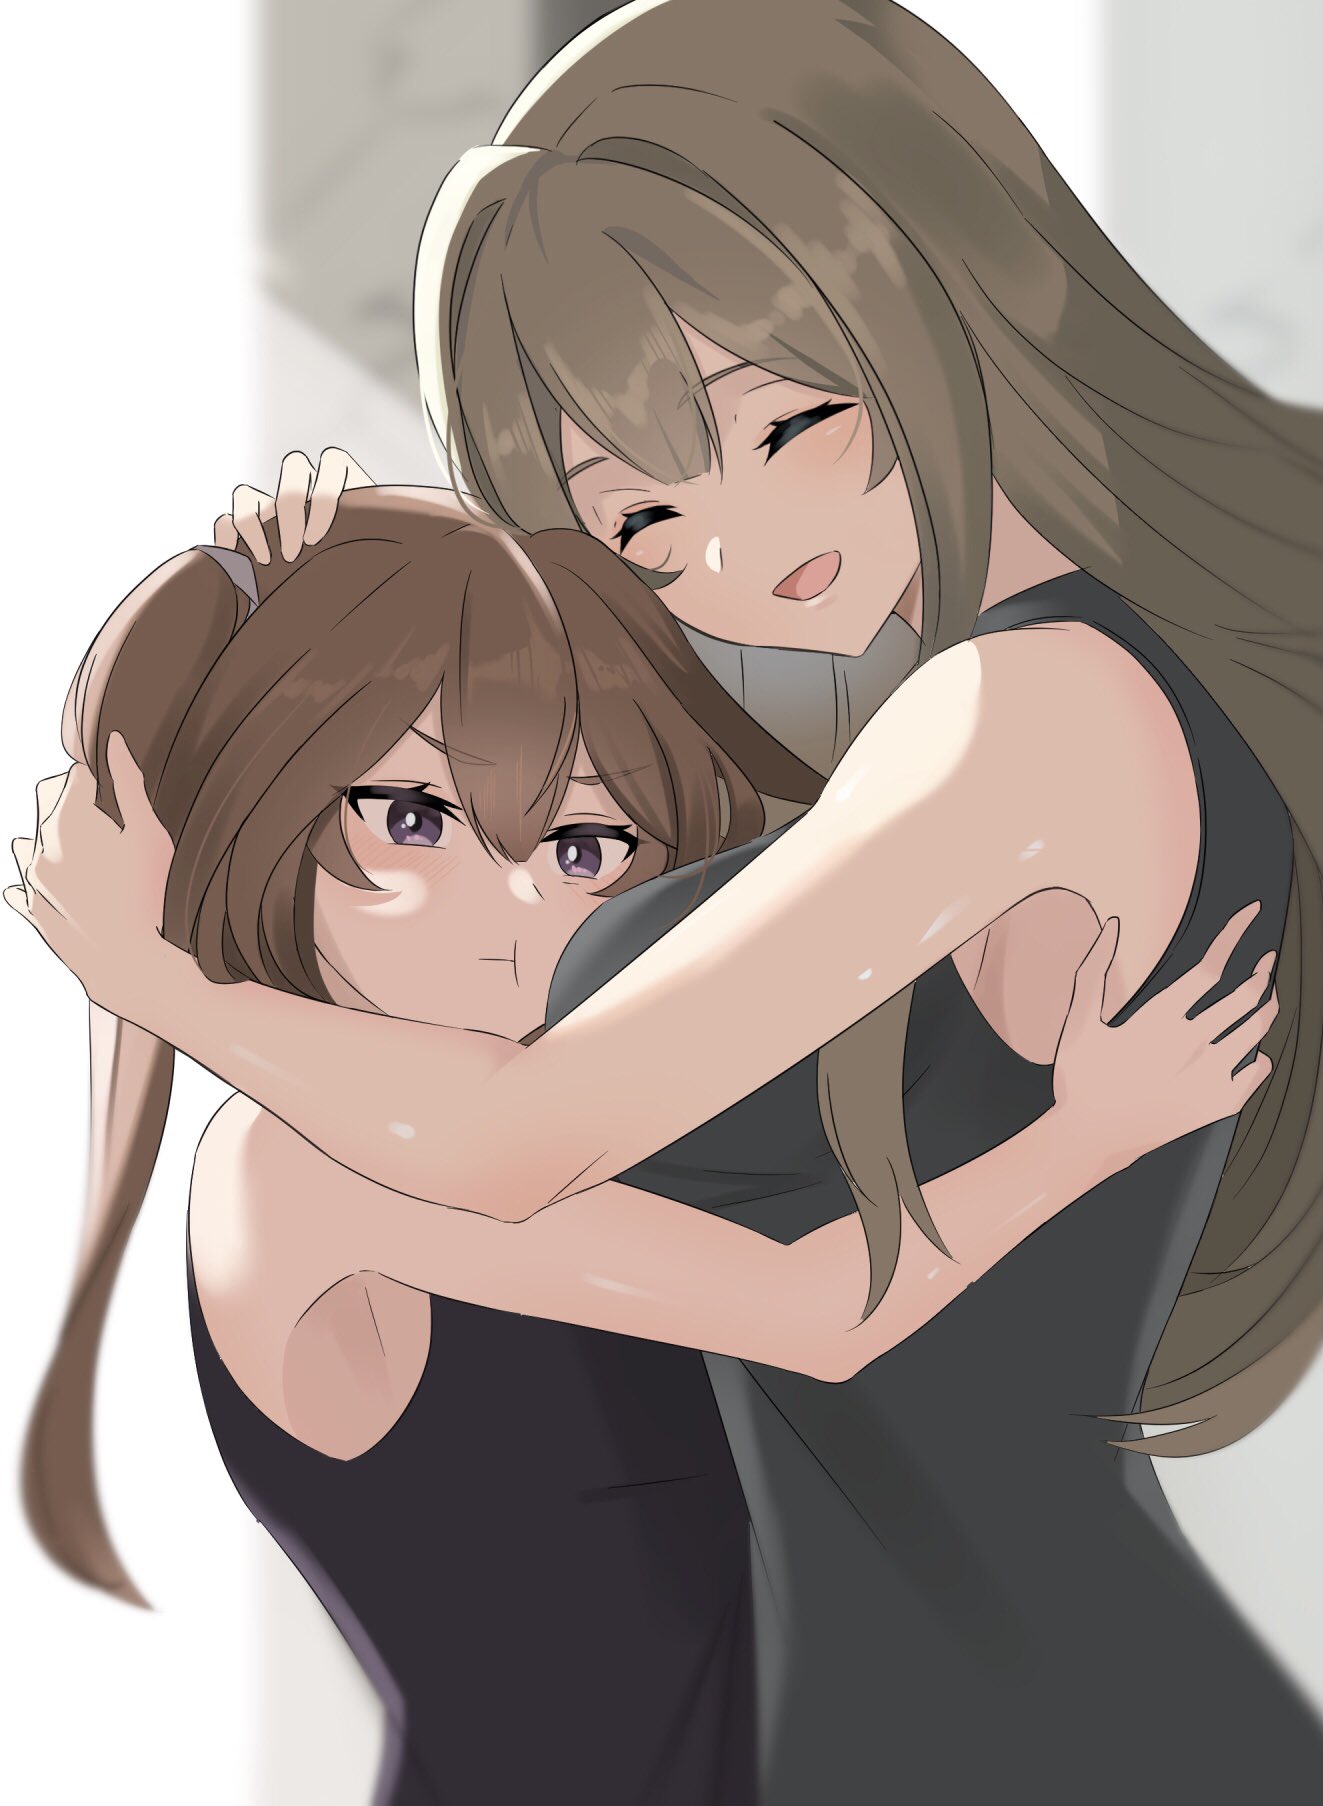 Boob hug anime